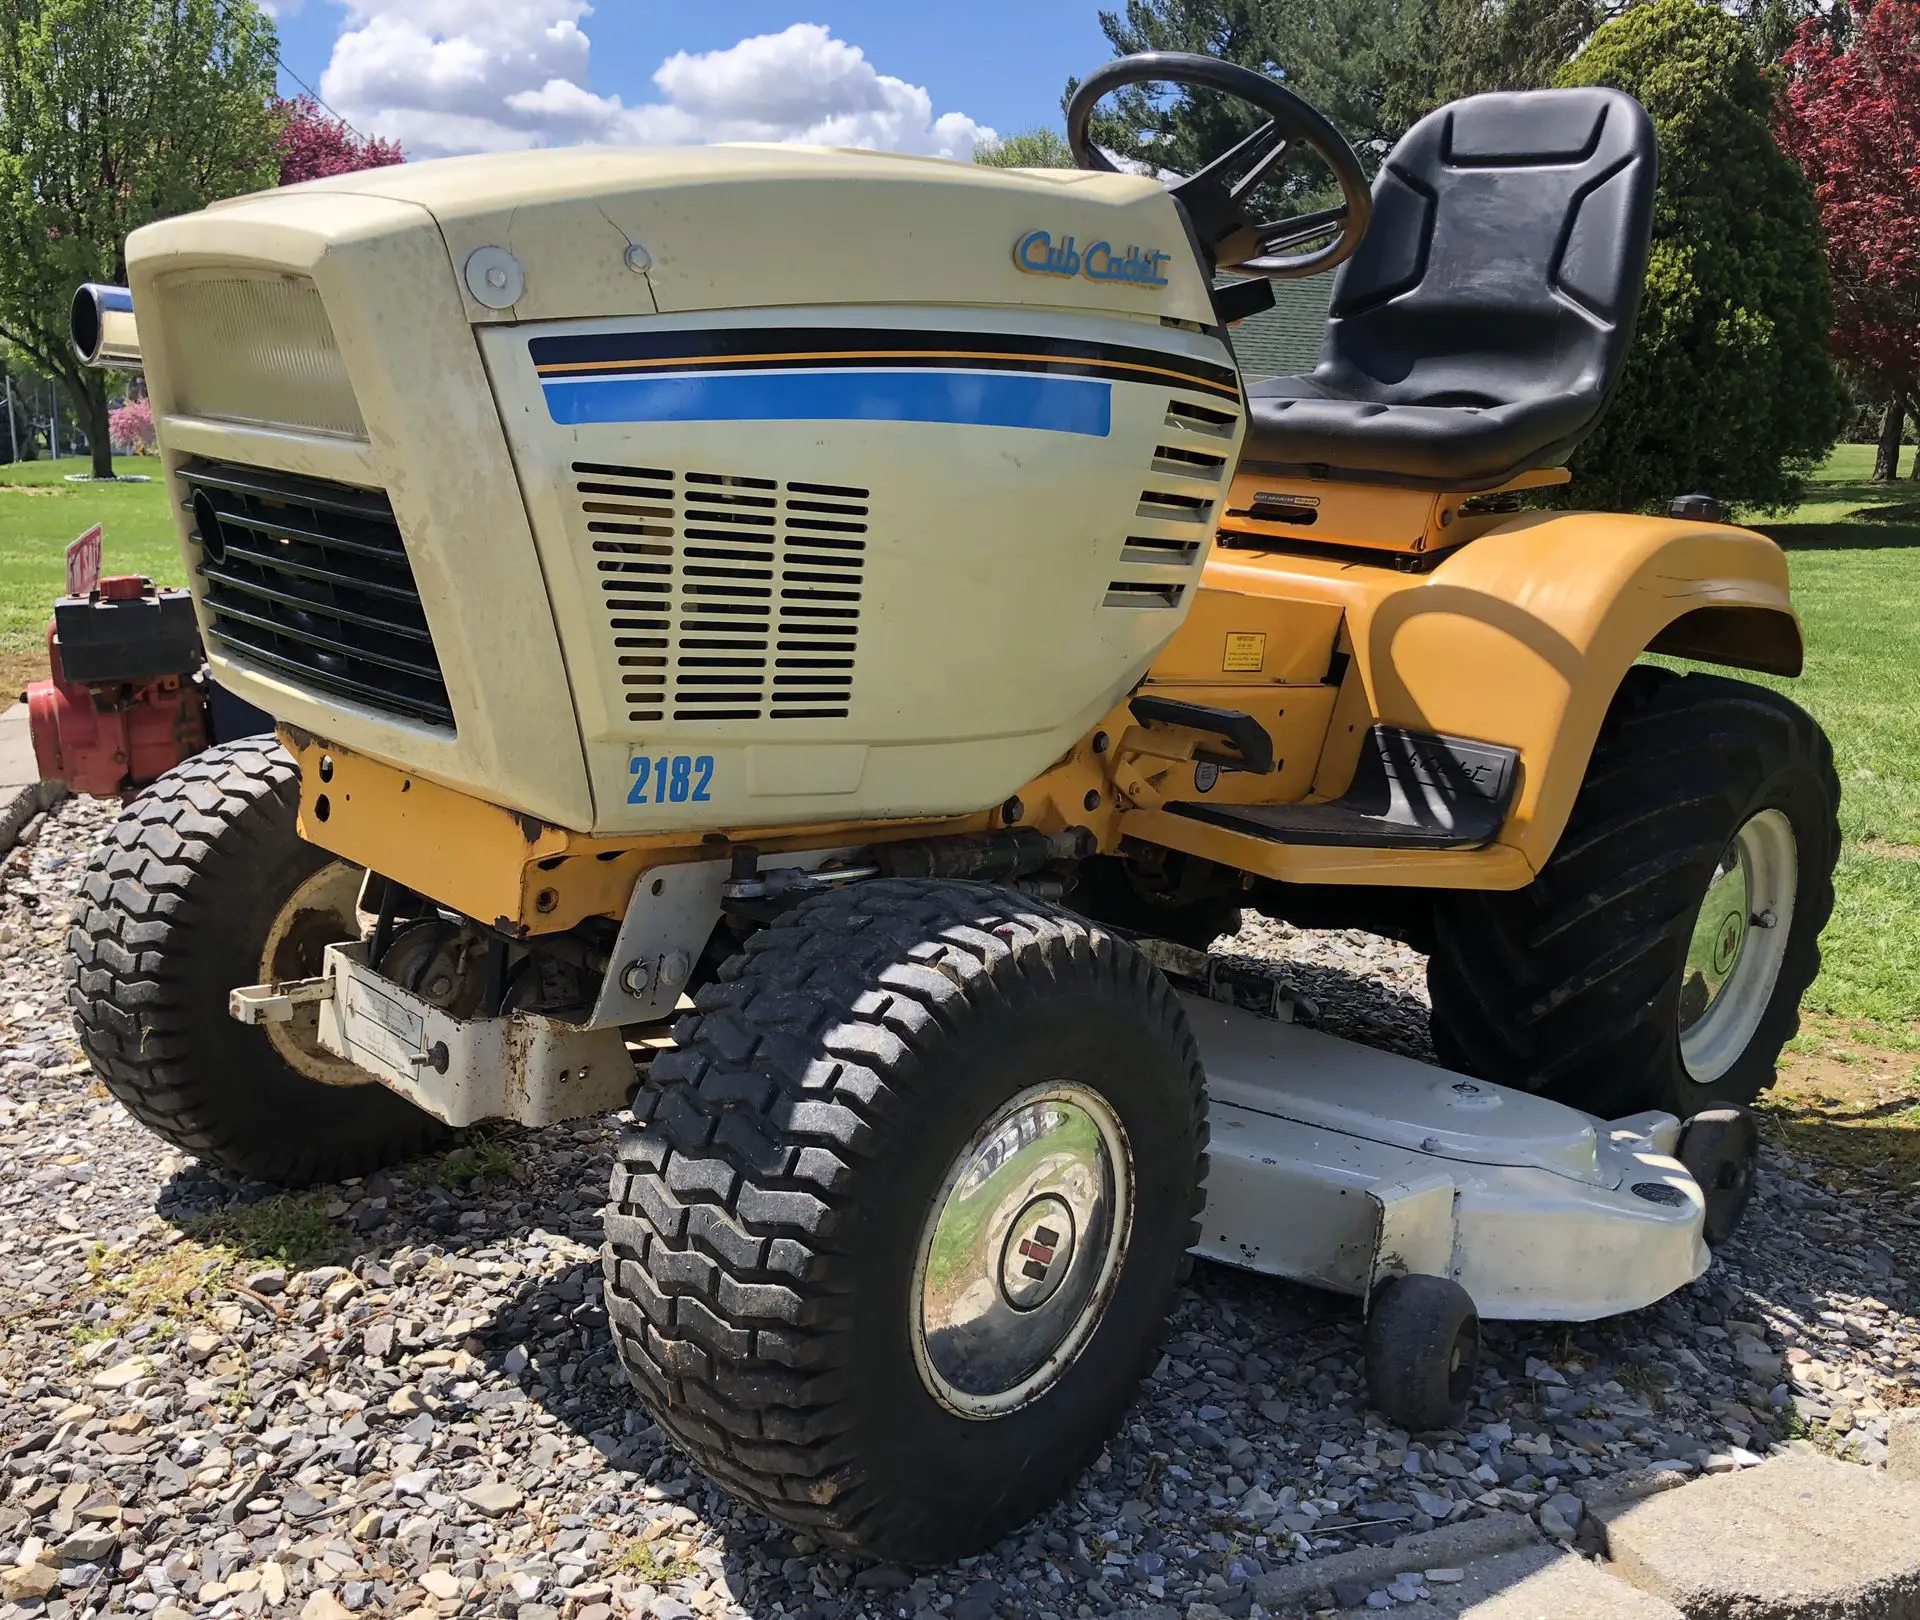 Cub Cadet Super 2182 Garden Tractor for Sale in Smithsburg, MD